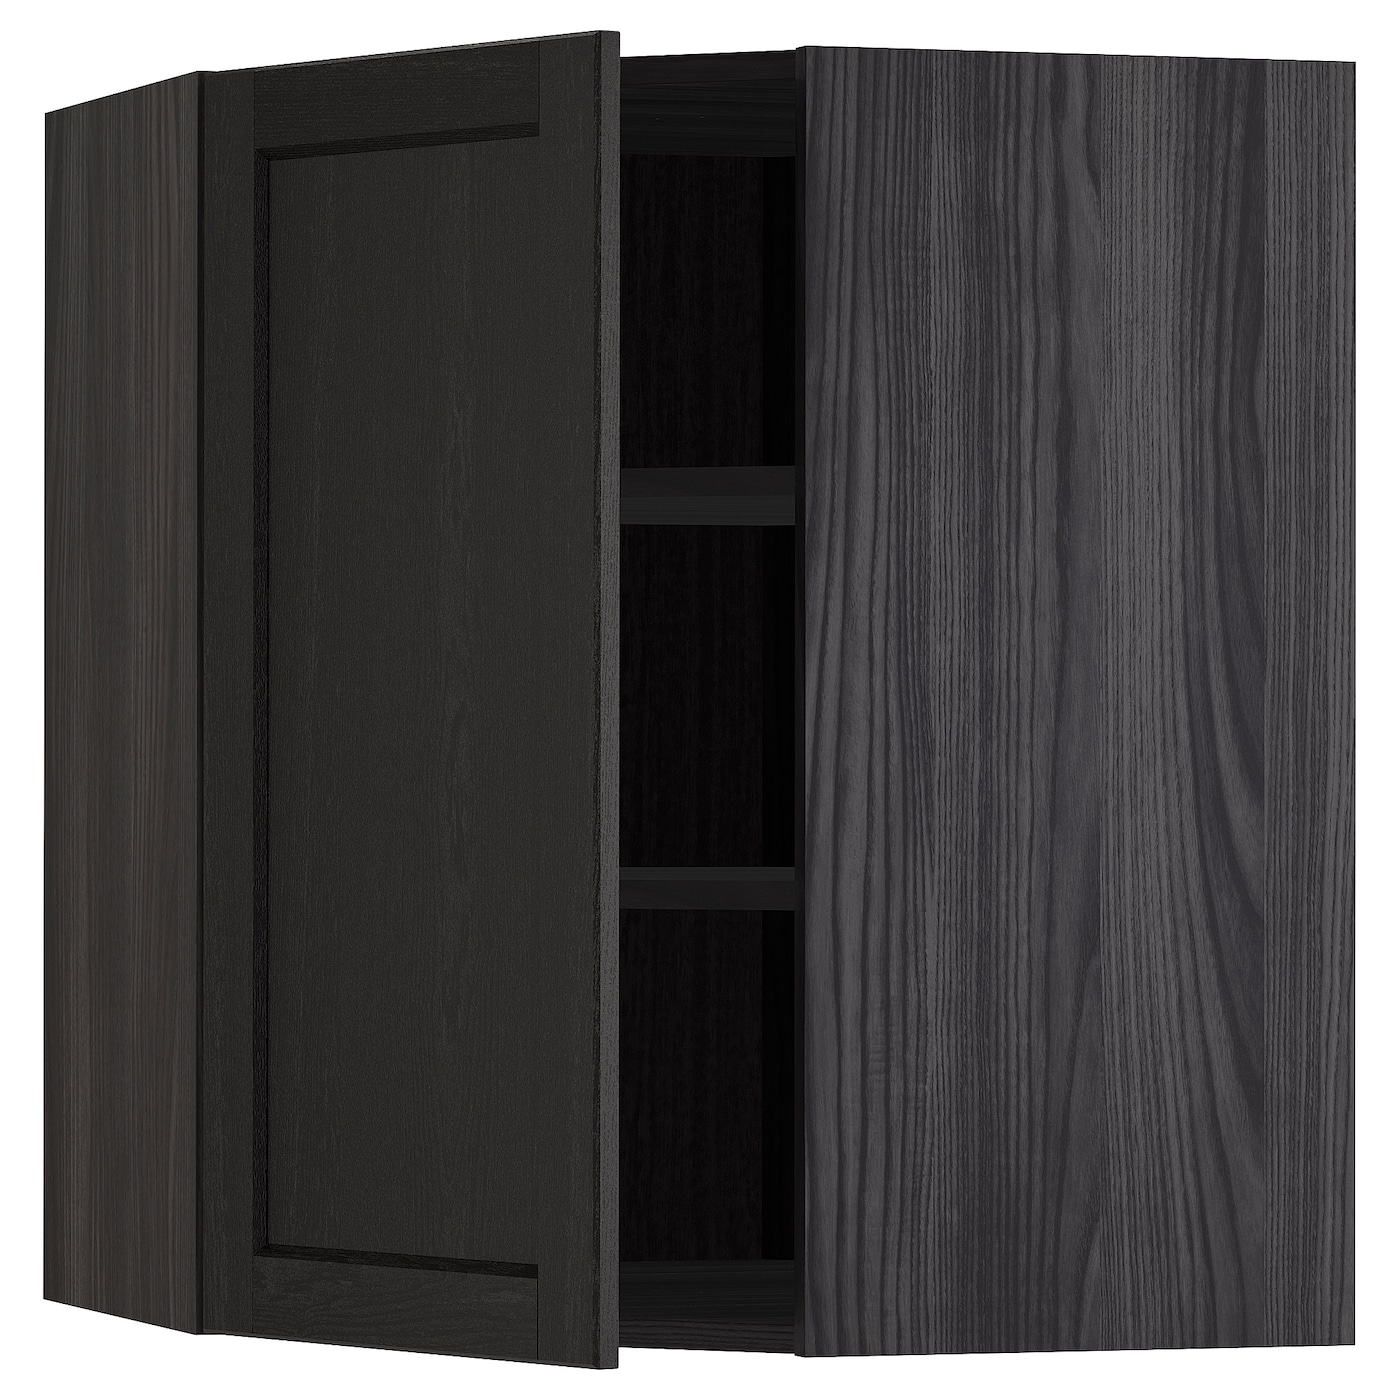 METOD Навесной шкаф - METOD IKEA/ МЕТОД ИКЕА, 80х68 см, черный